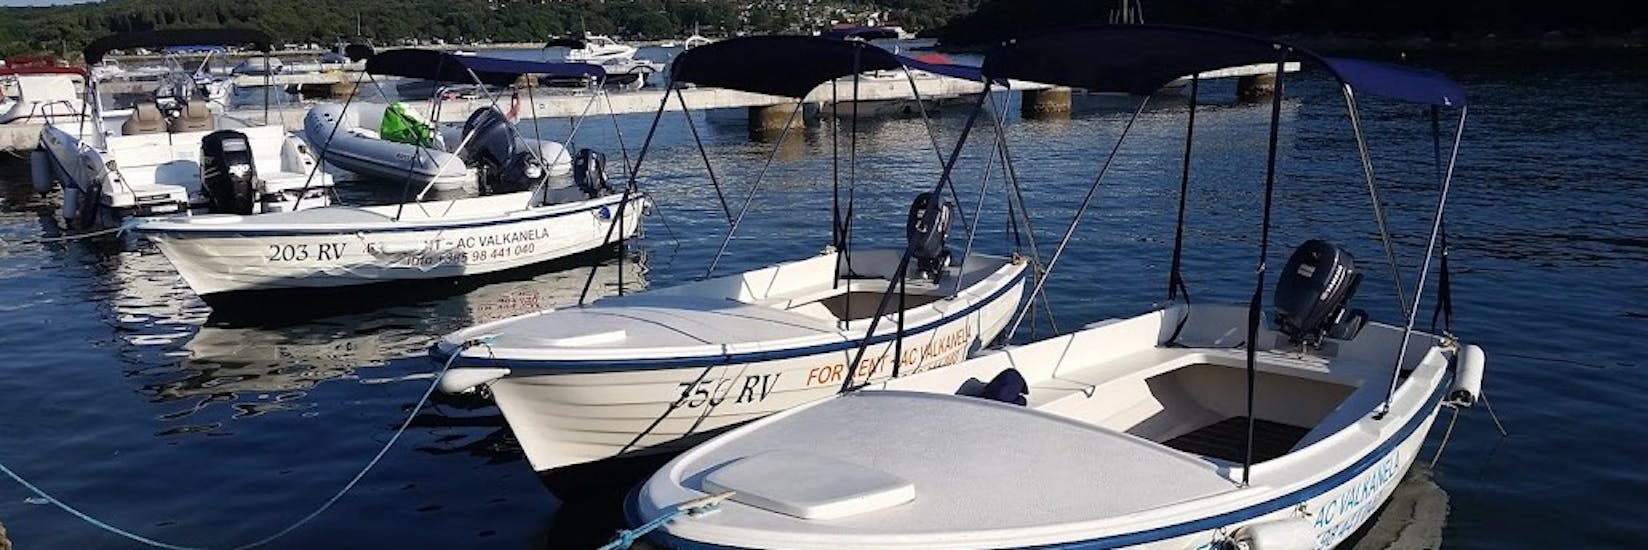 Foto del barco de alquiler Vrsar barco (hasta 6 personas) con Lux Rent A Boat & Jet Ski Vrsar.